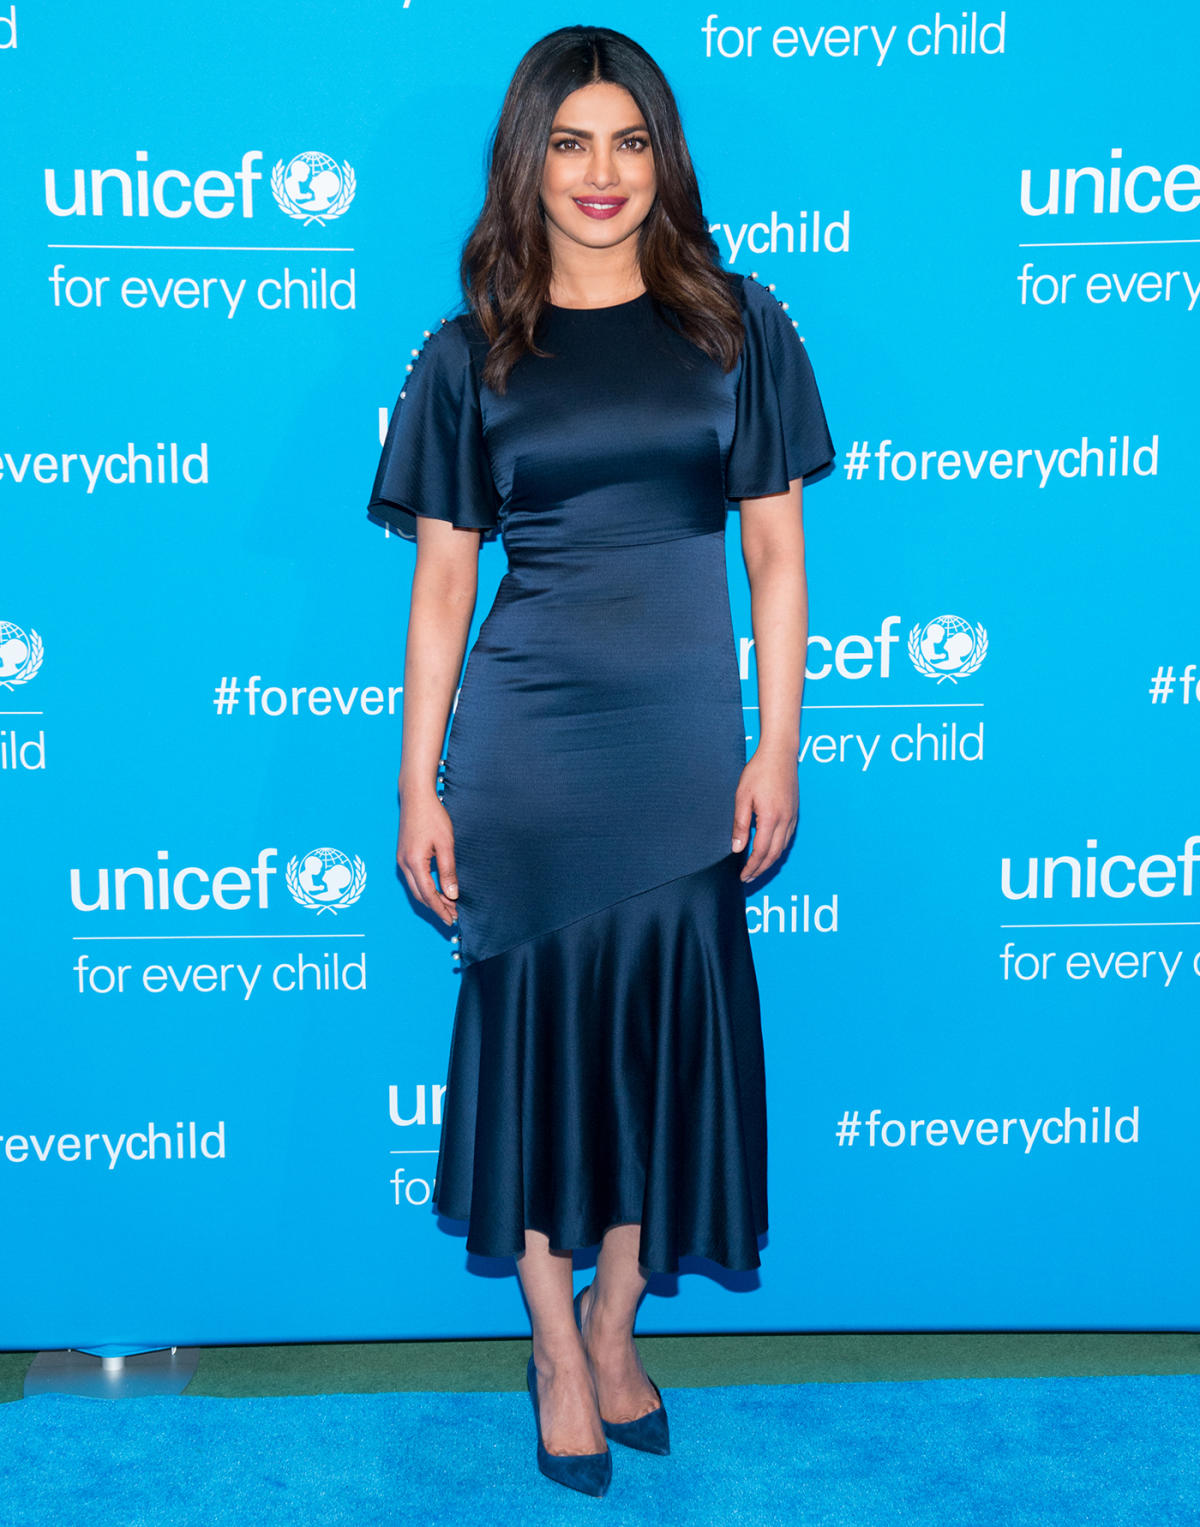 Priyanka Chopra Becomes a UNICEF Global Ambassador with Help from David Beckham